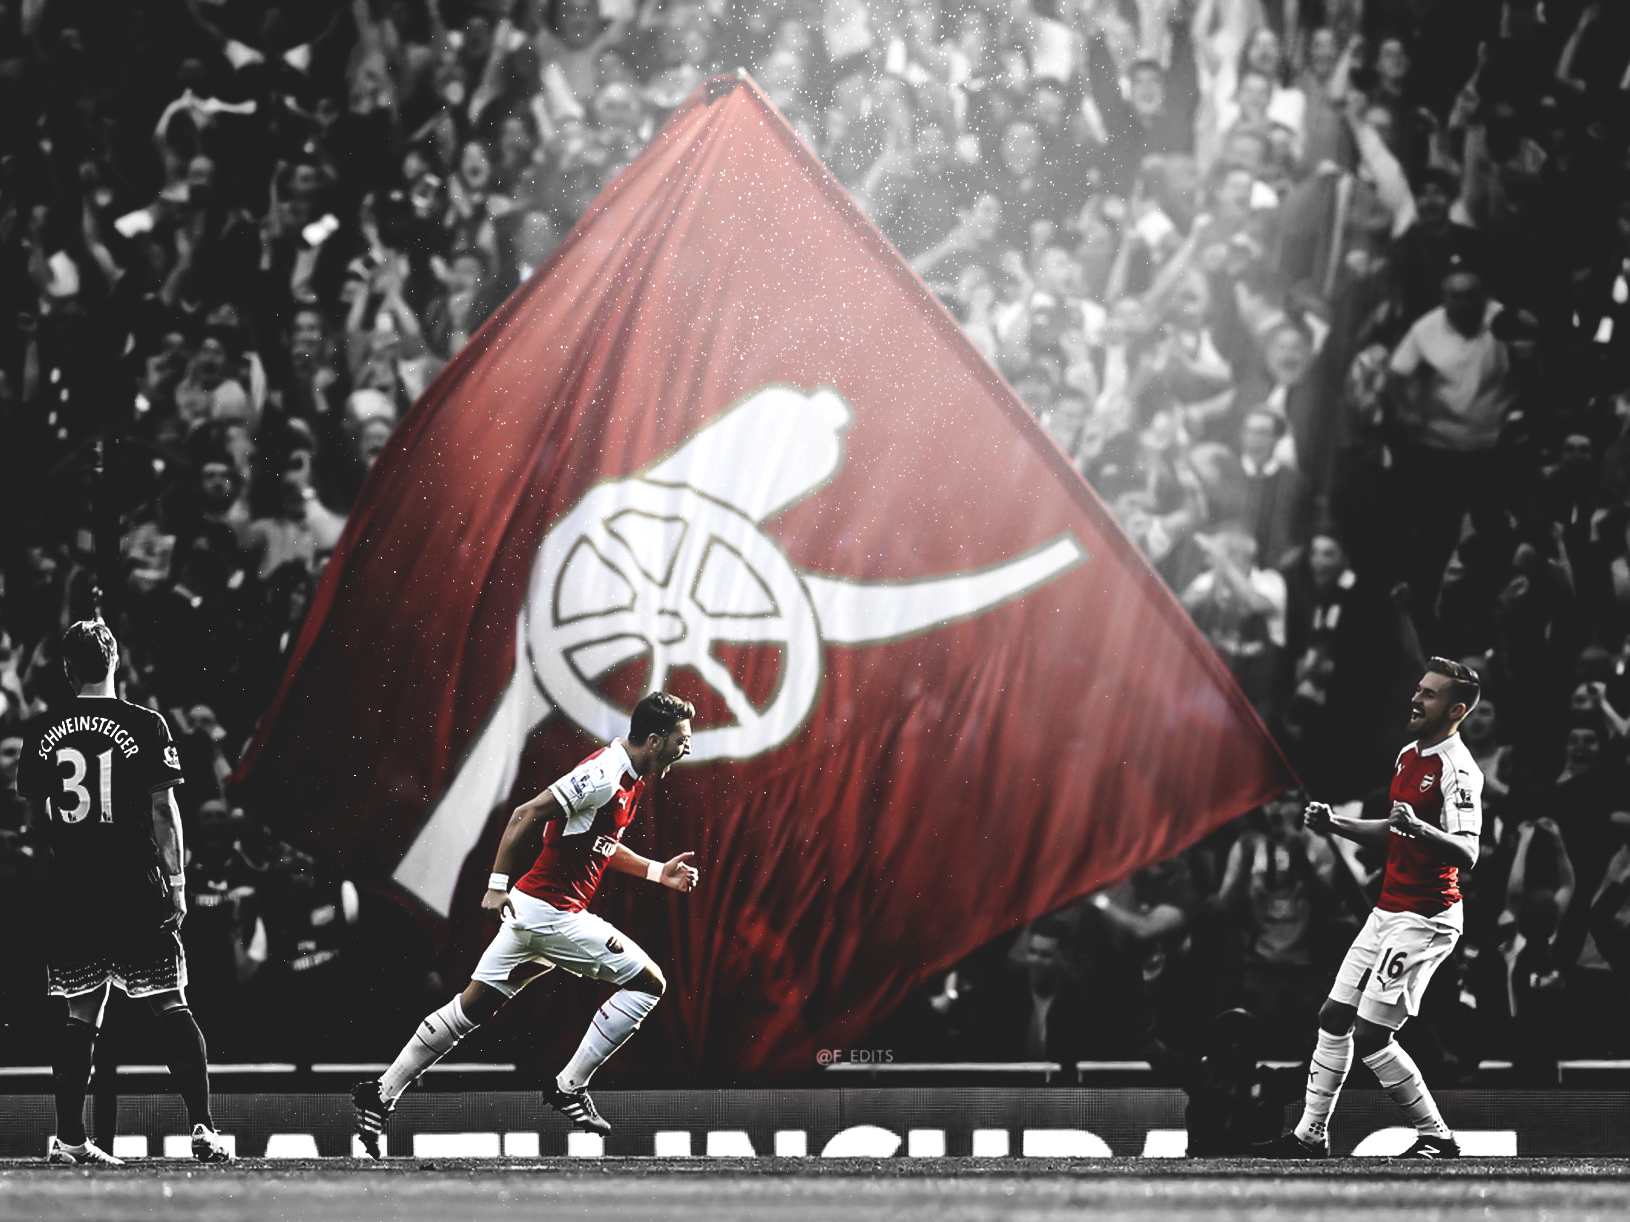 Arsenal vs Manchester United desktop wallpaper by F-EDITS on DeviantArt